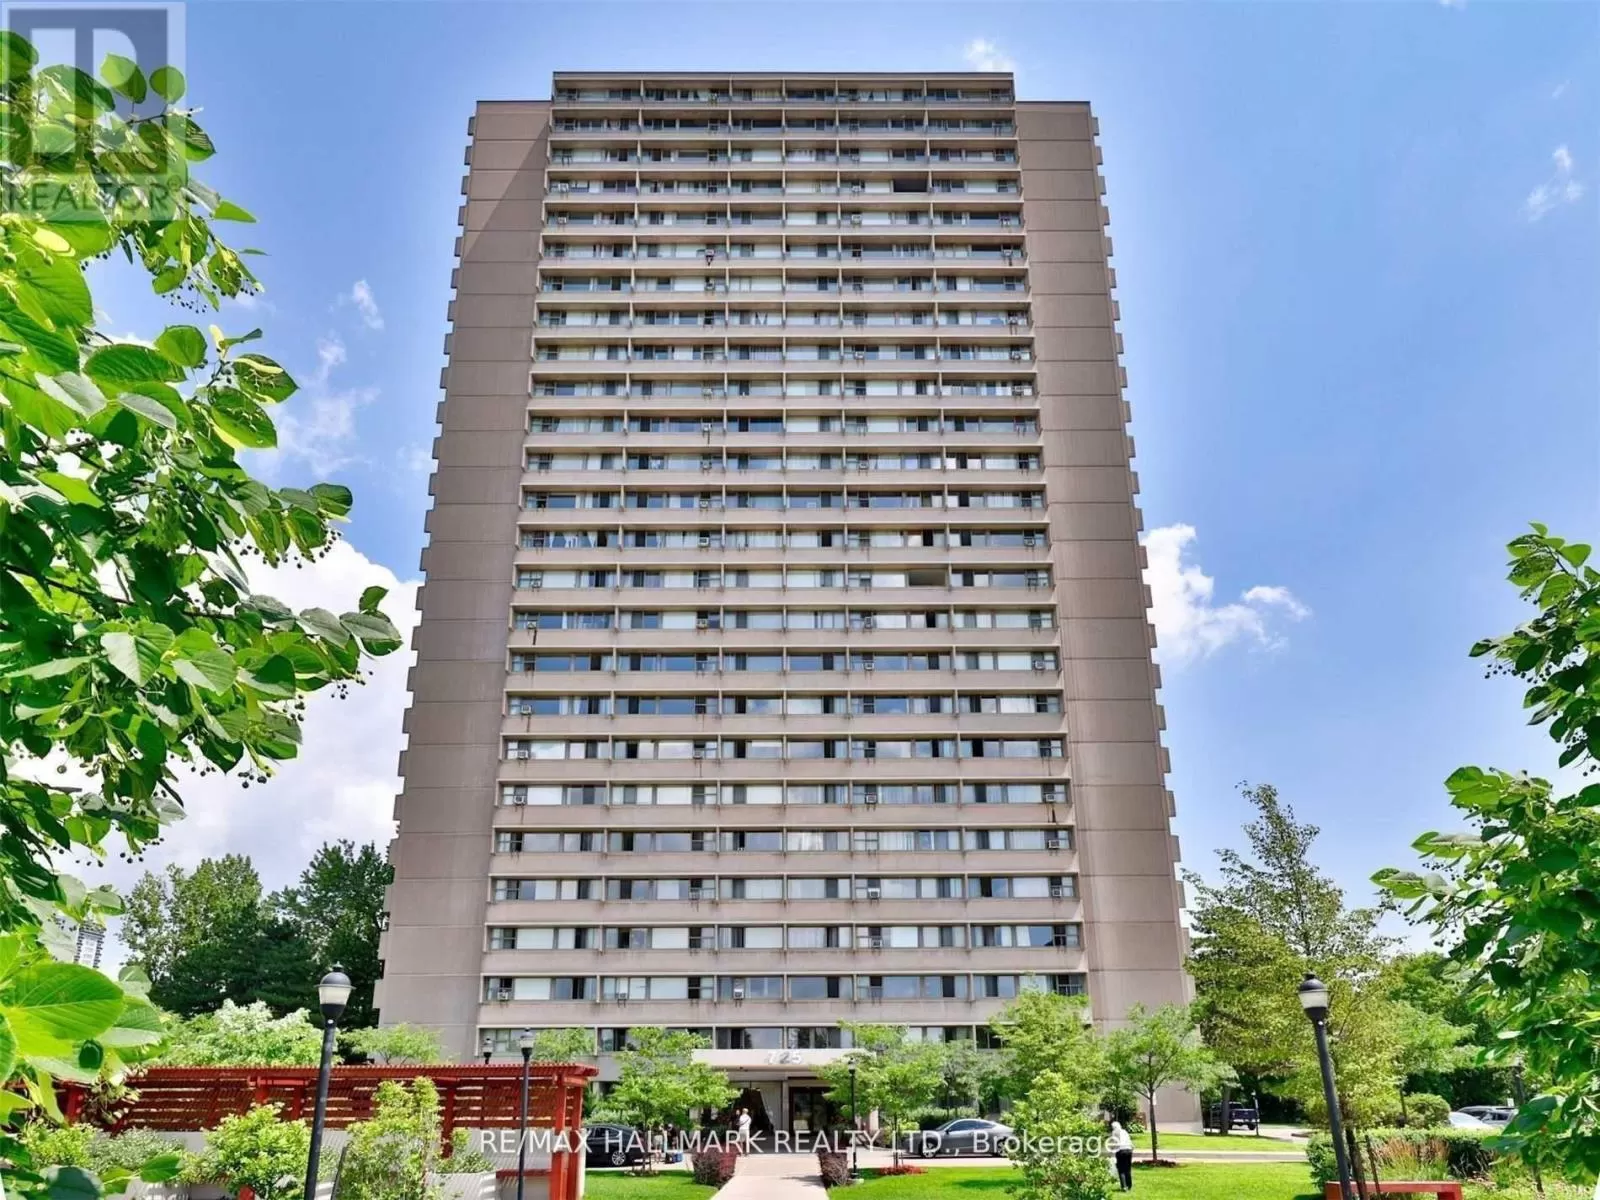 Apartment for rent: 1101 - 725 Don Mills Road, Toronto, Ontario M3C 1S6